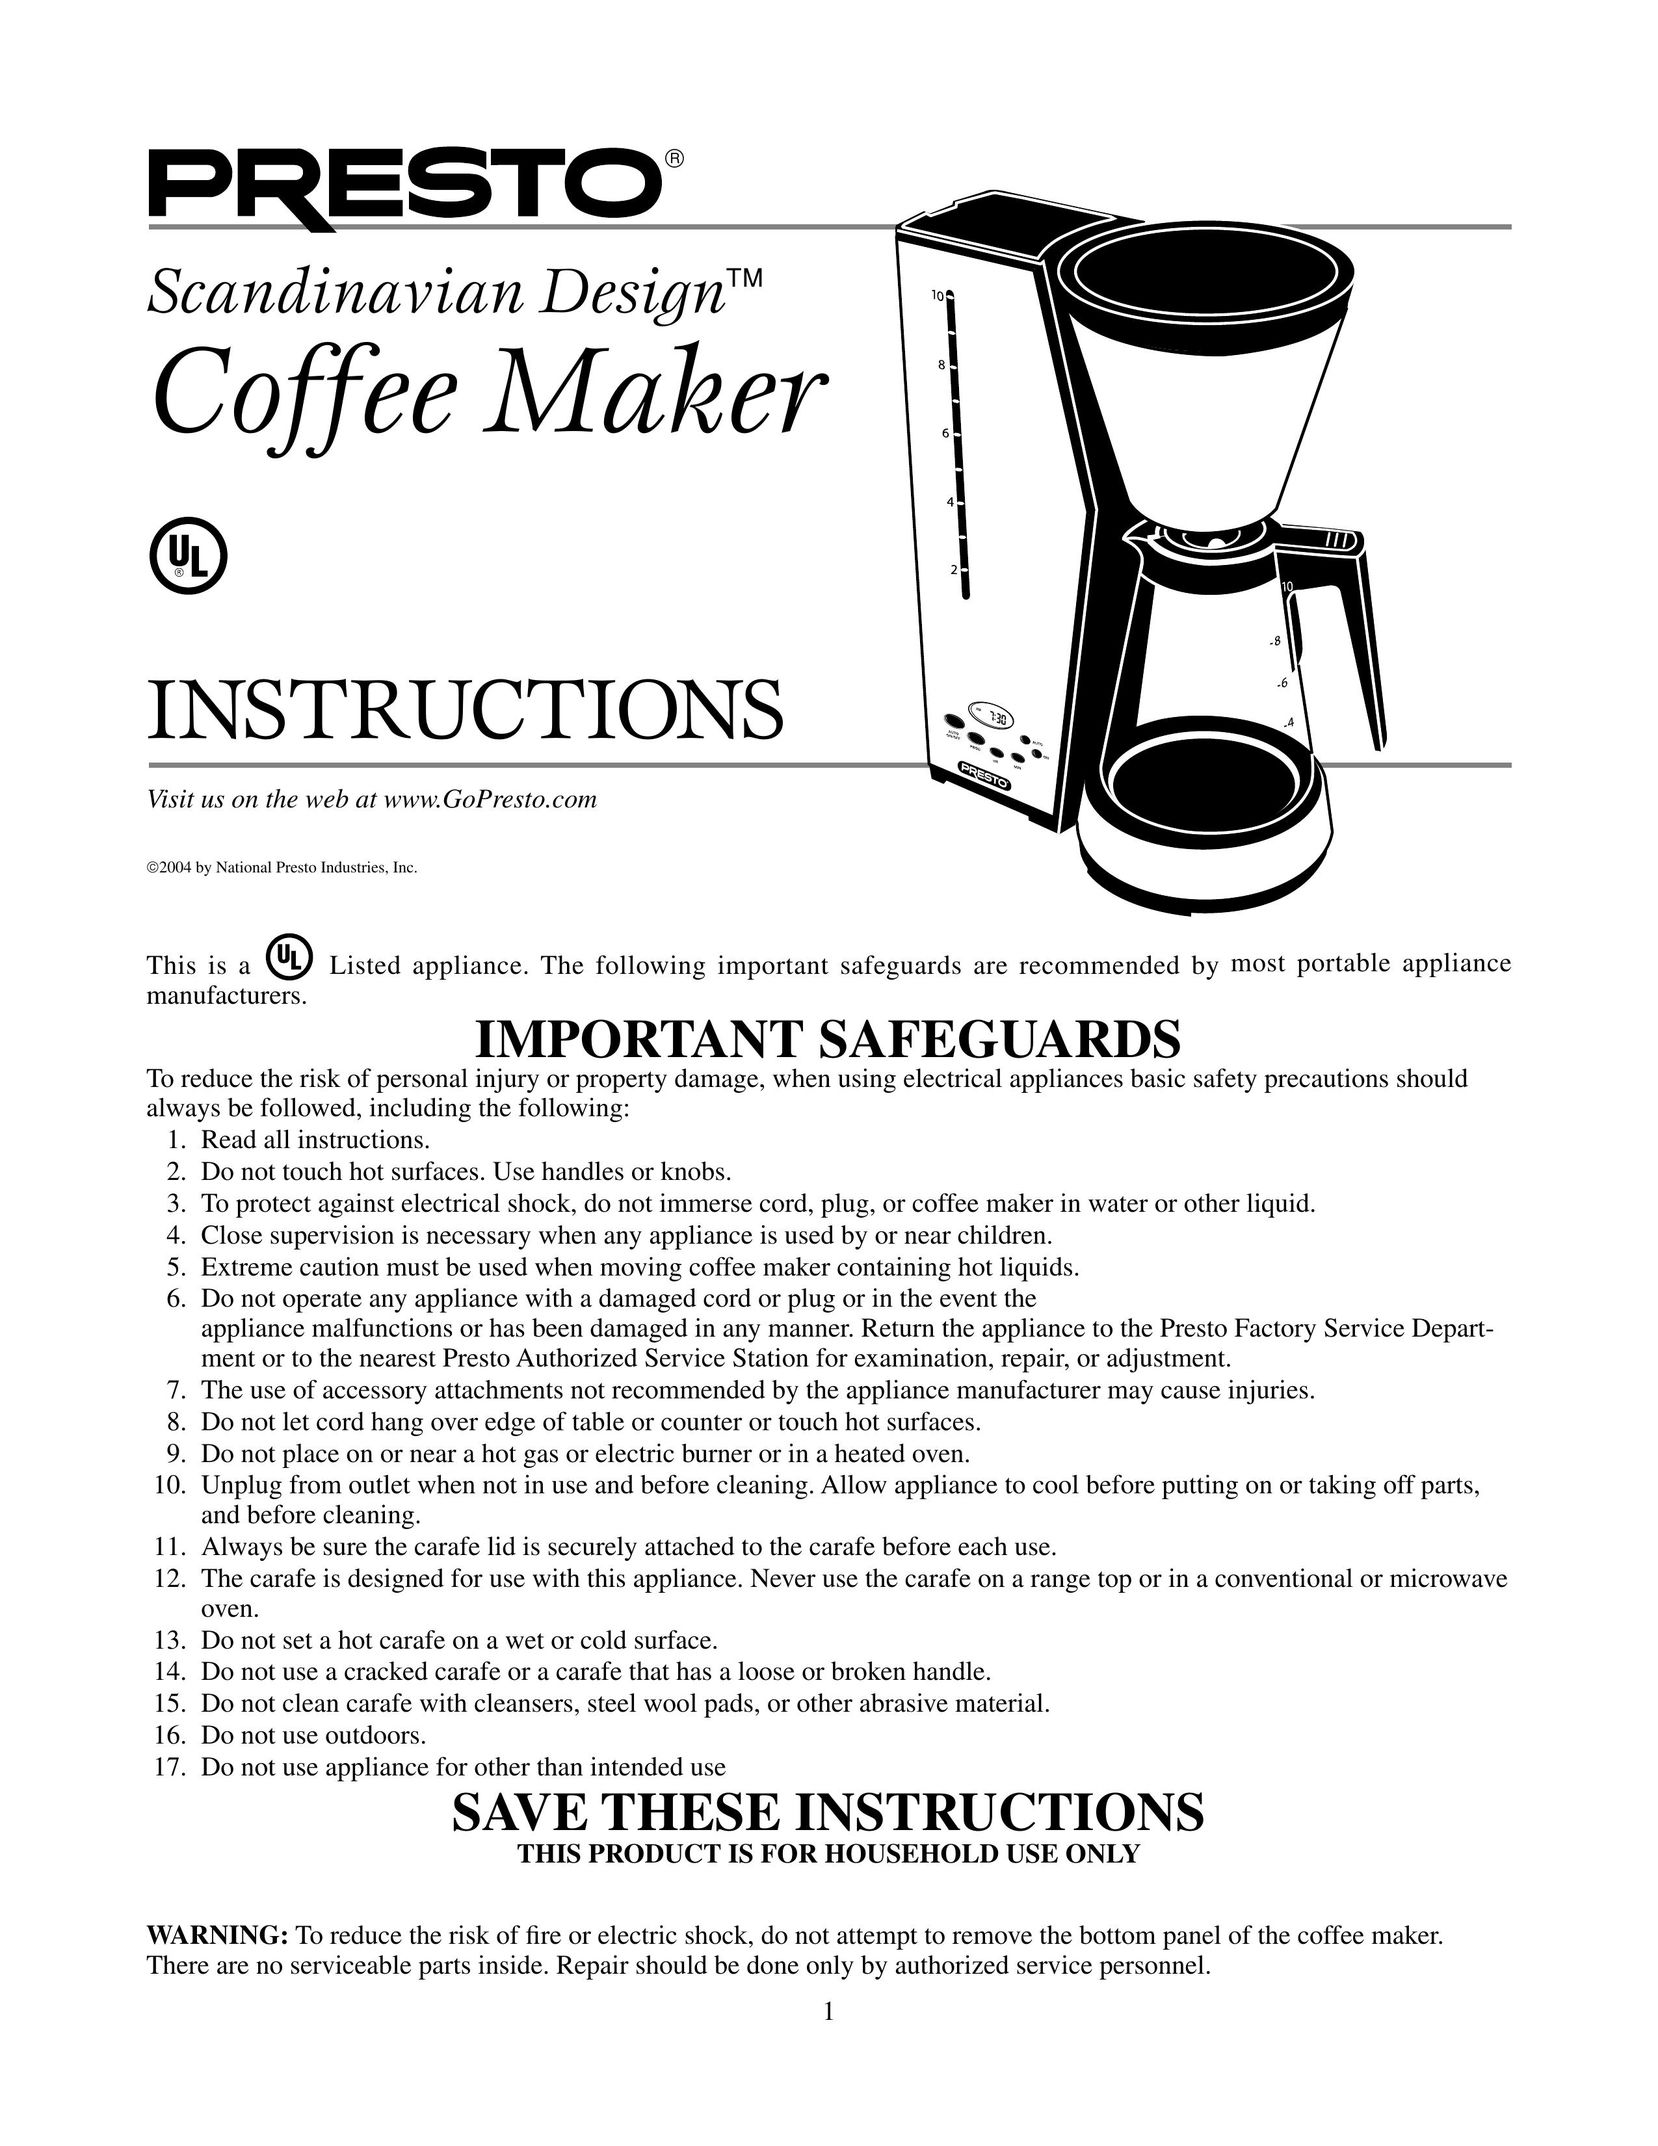 Presto Scandinavian Design Coffeemaker User Manual